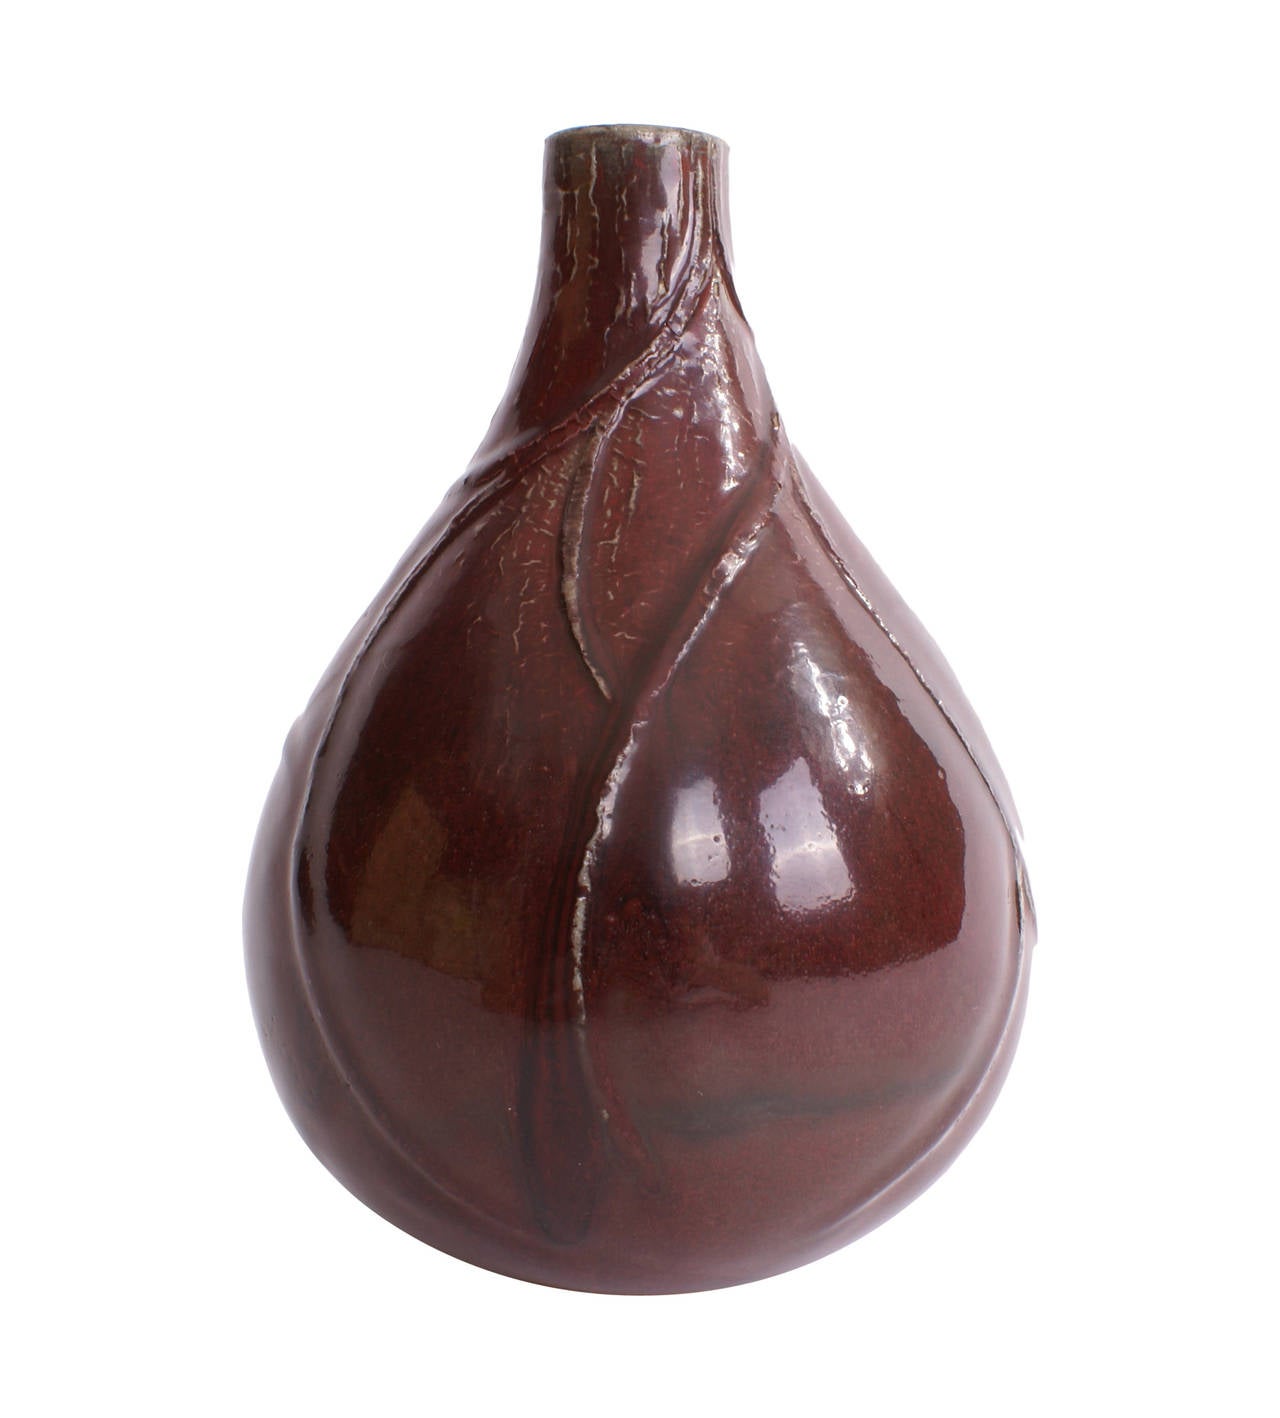 Axel Salto stoneware vase in oxblood glaze for Royal Copenhagen, Denmark. Singed in the bottom 